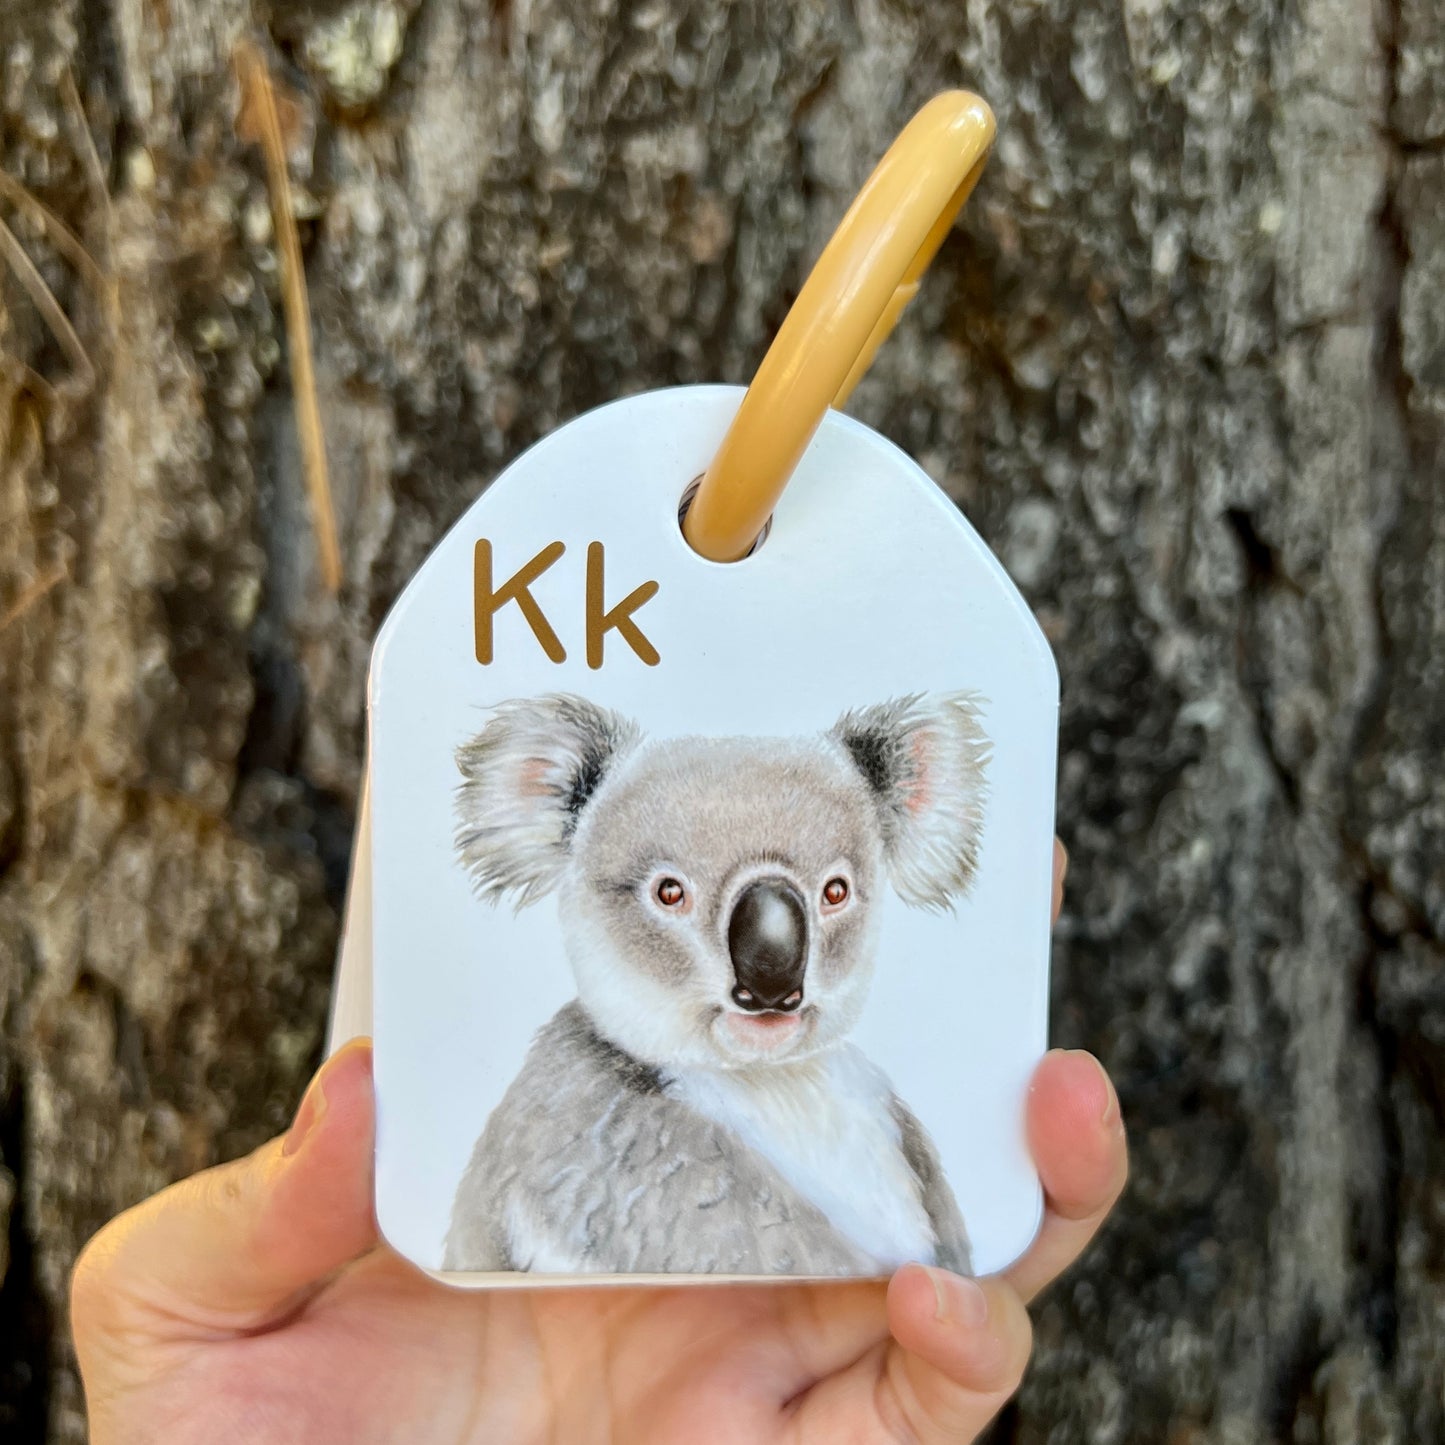 Ringed - Australian Animal Alphabet Flash Cards